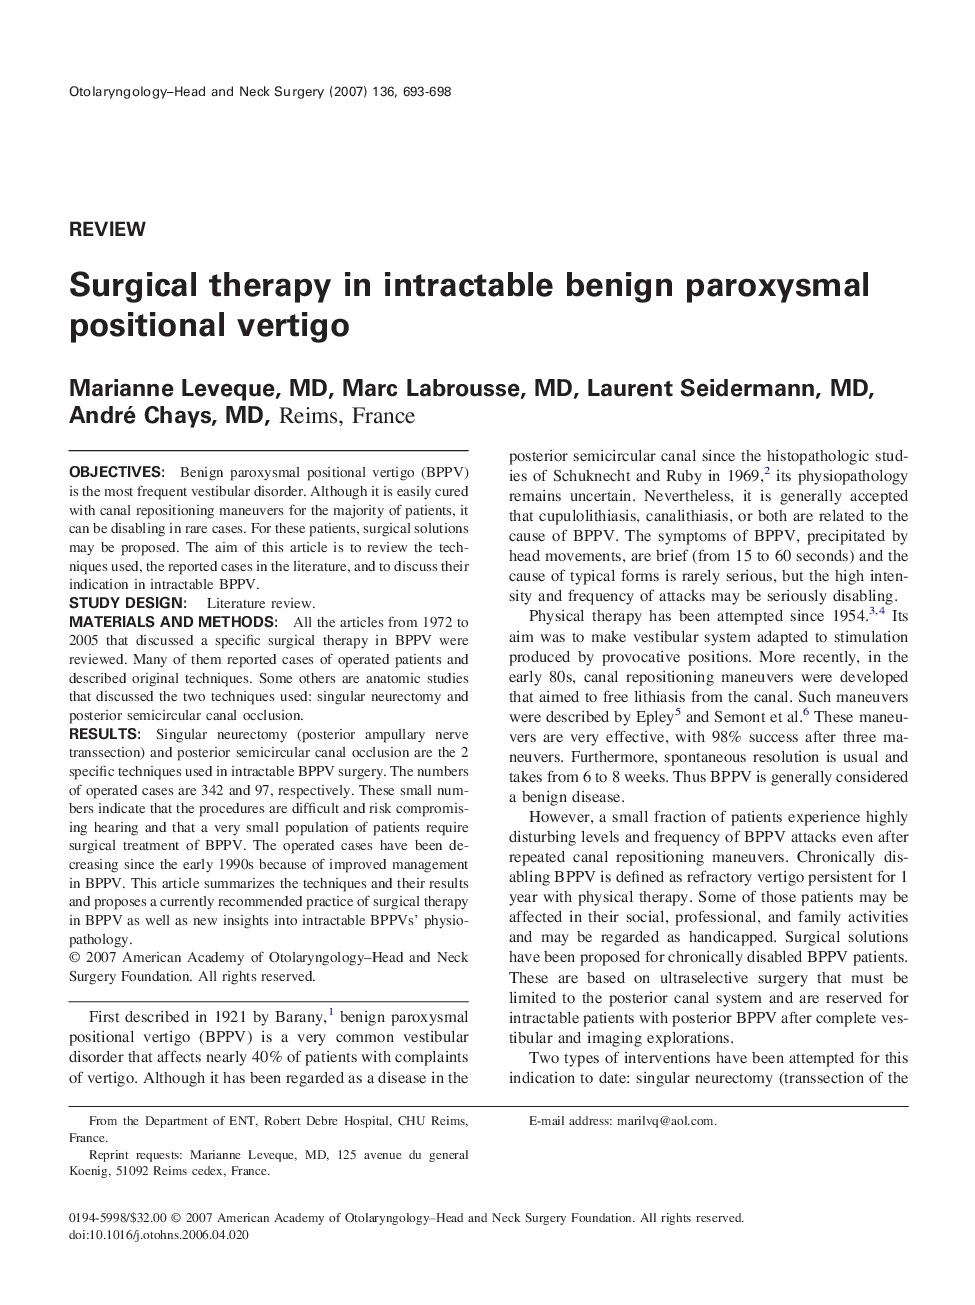 Surgical therapy in intractable benign paroxysmal positional vertigo